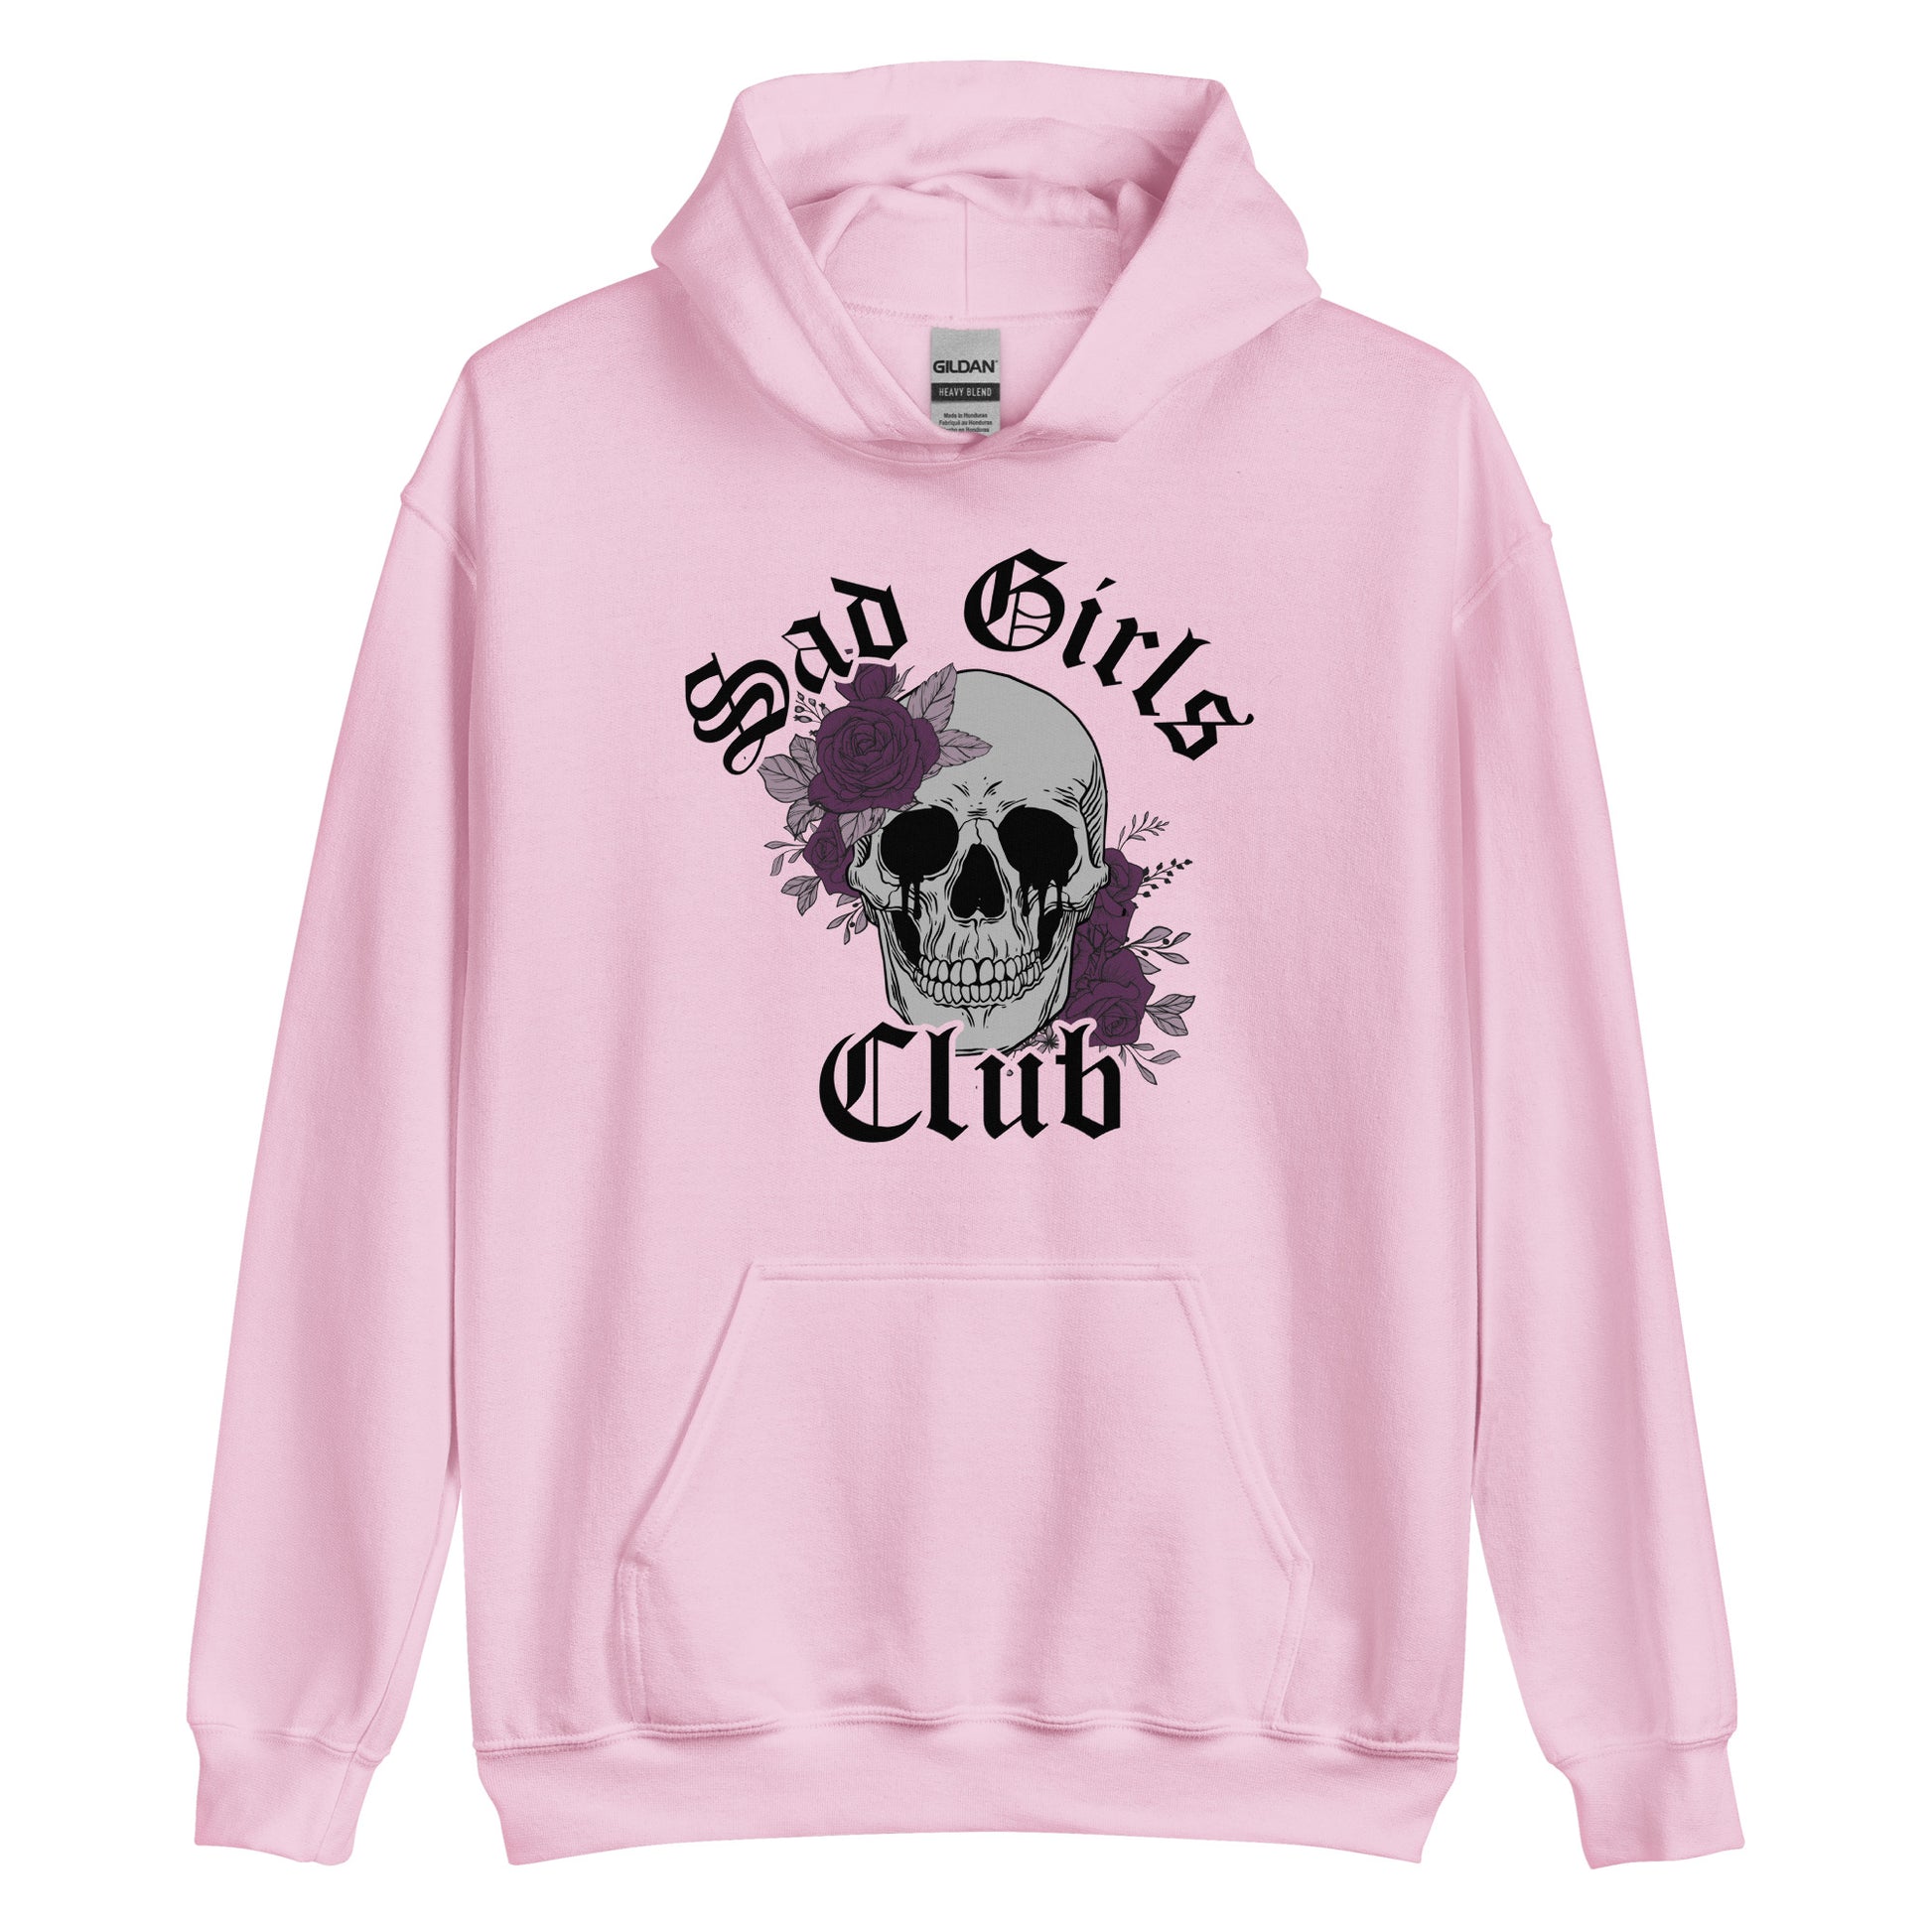 Sad Girls Club Hoodie pink